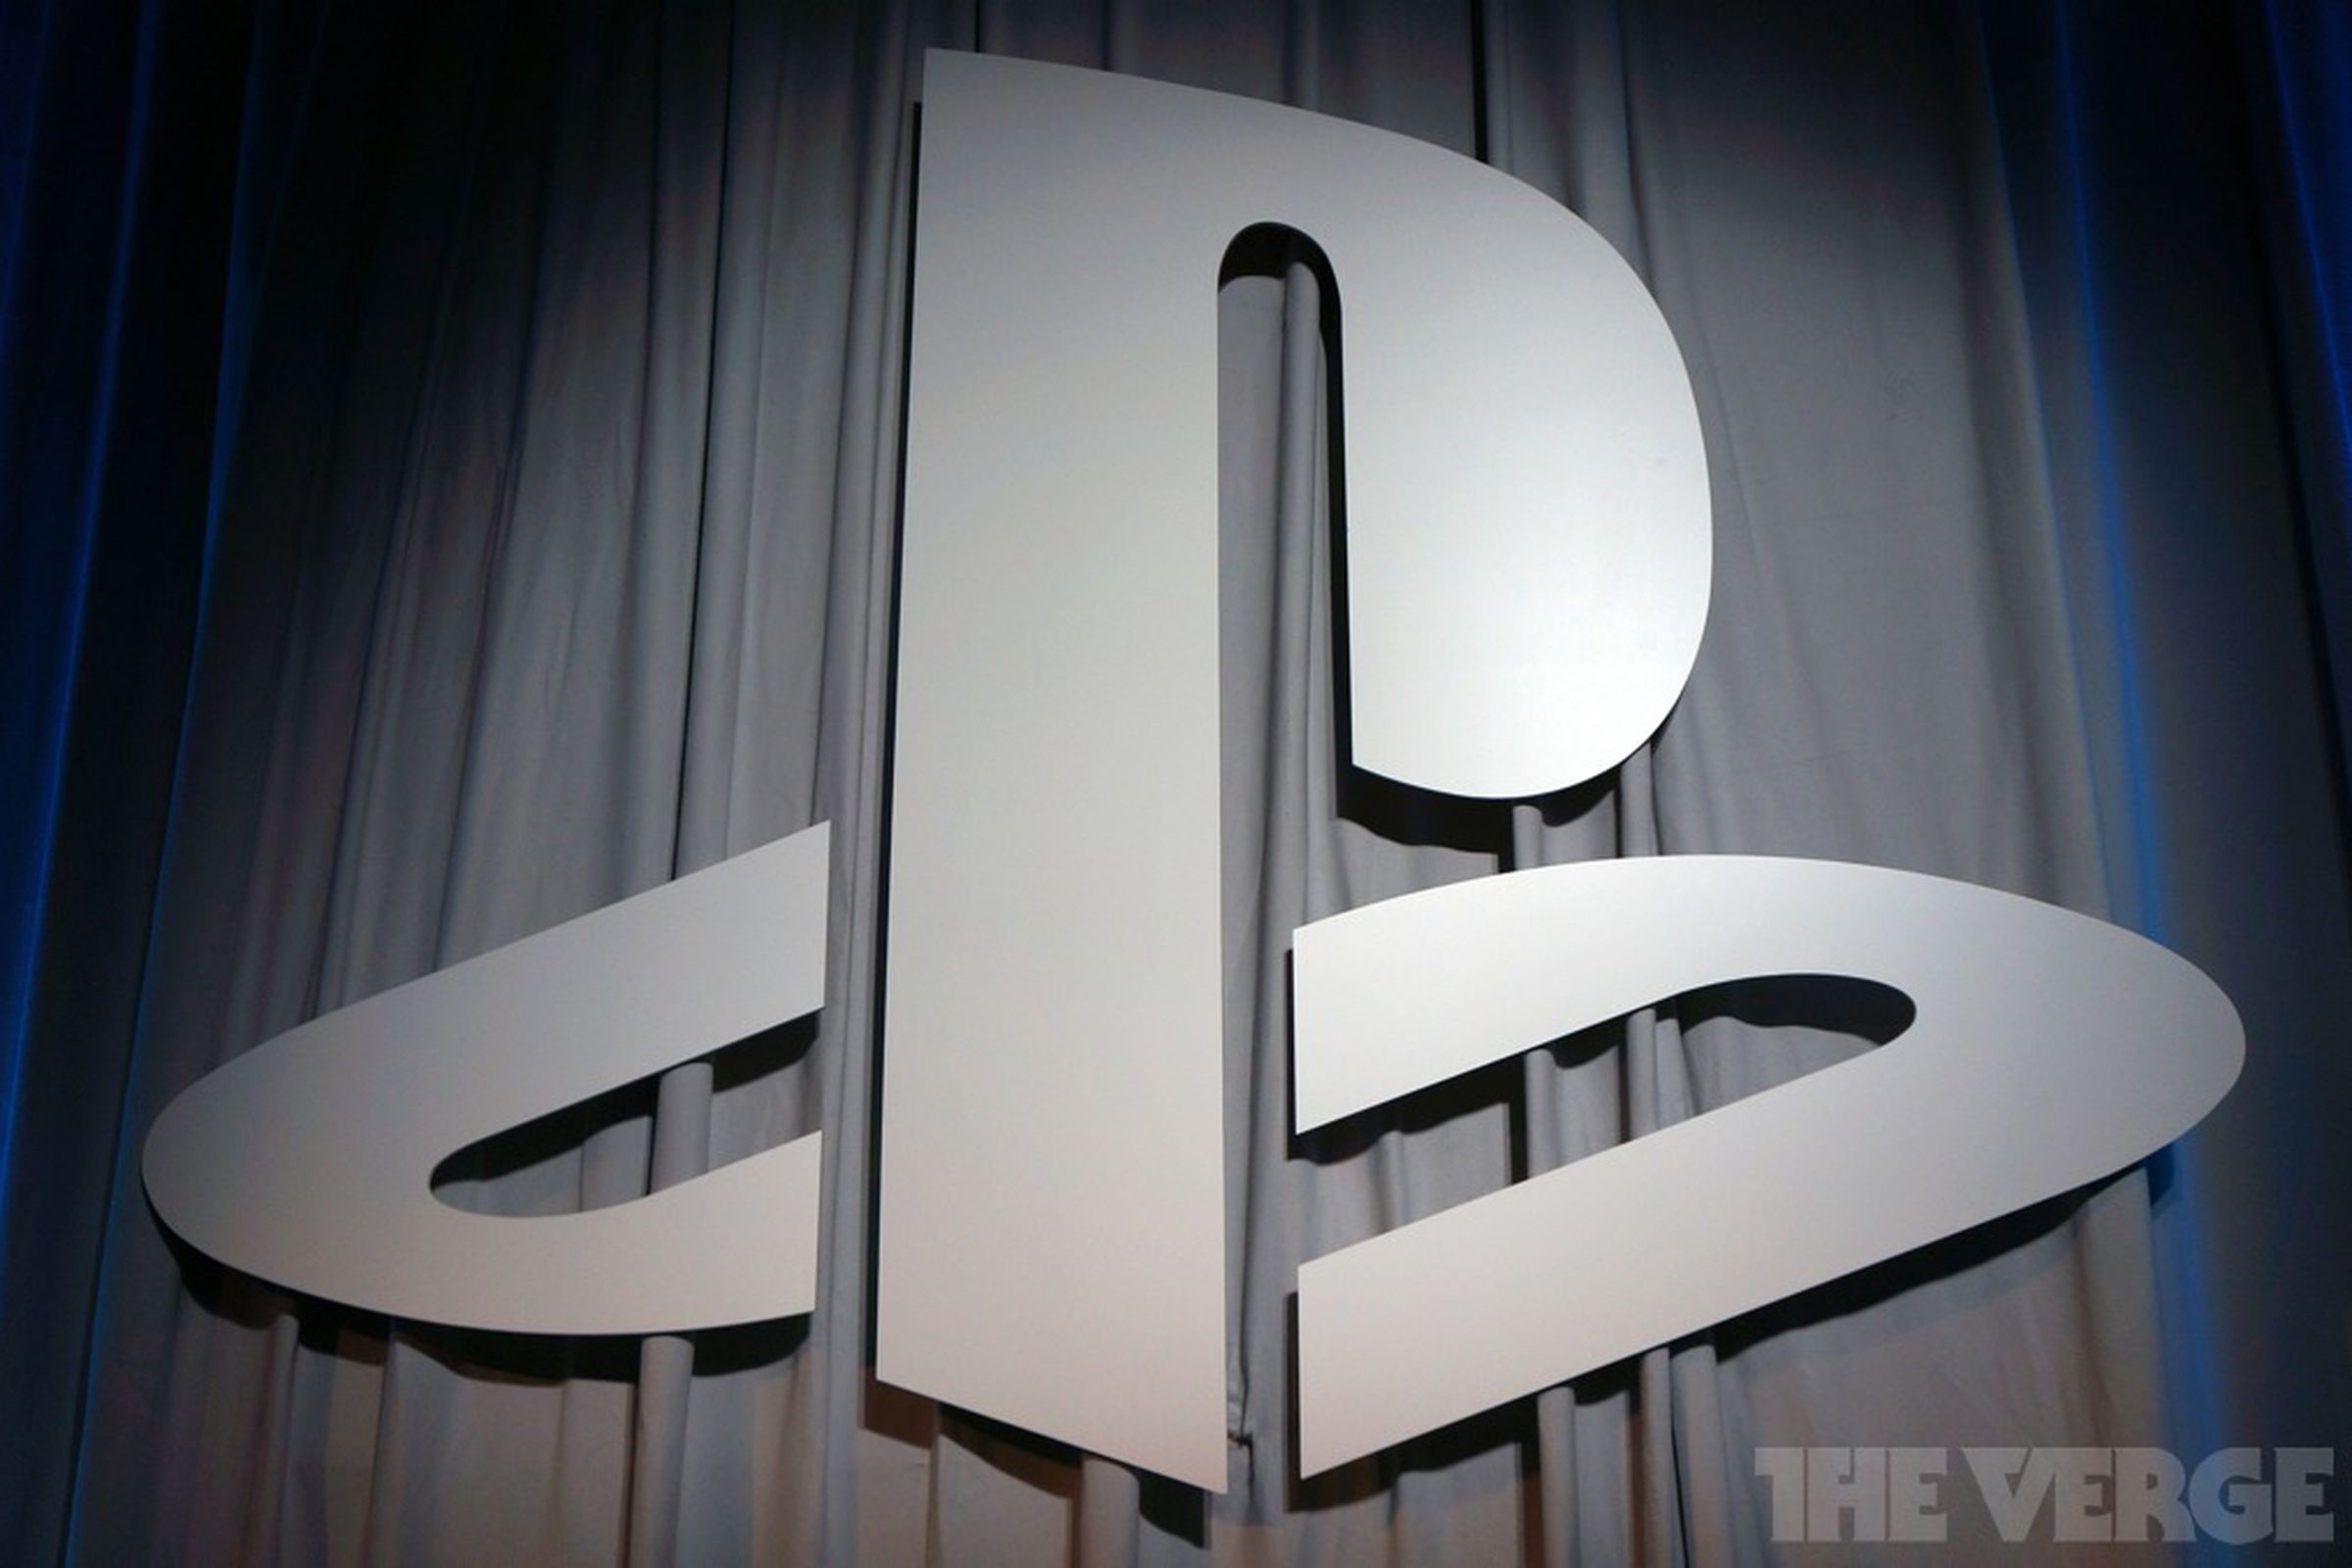 PlayStation logo (verge stock)